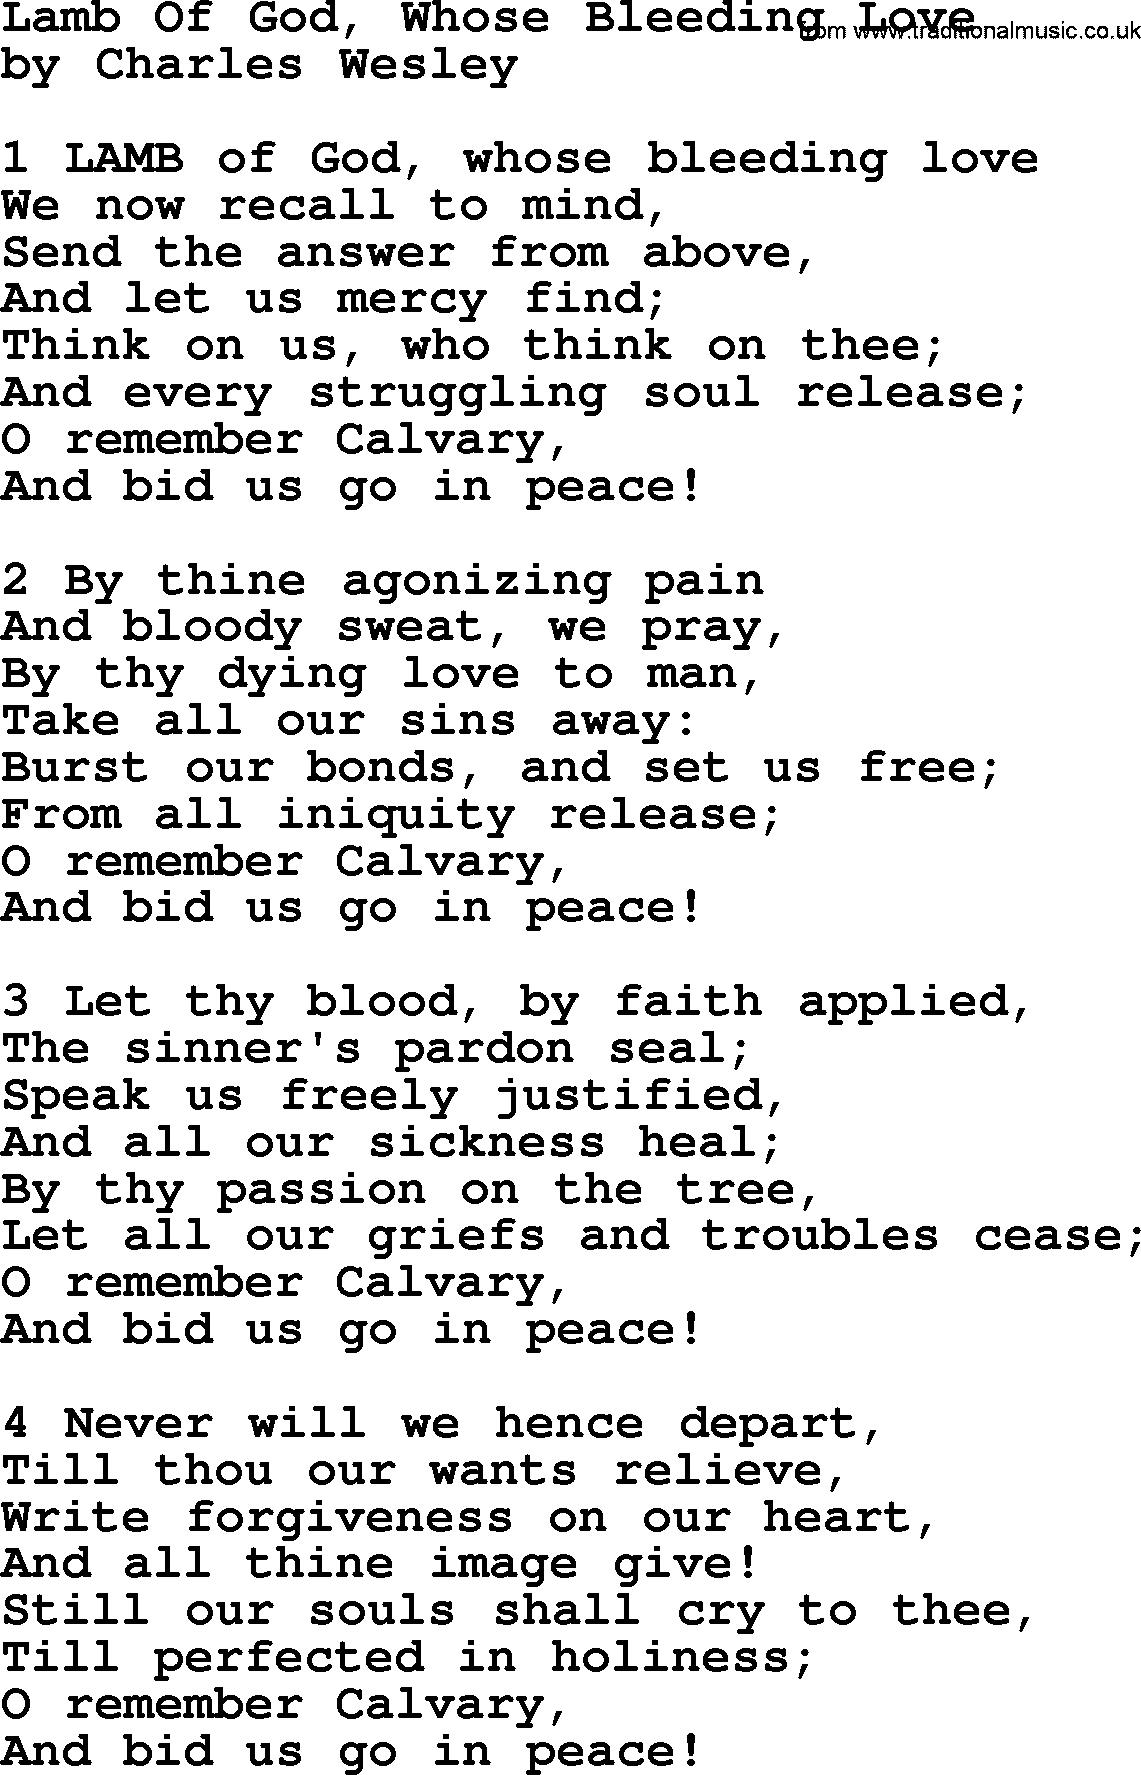 Charles Wesley hymn: Lamb Of God, Whose Bleeding Love, lyrics